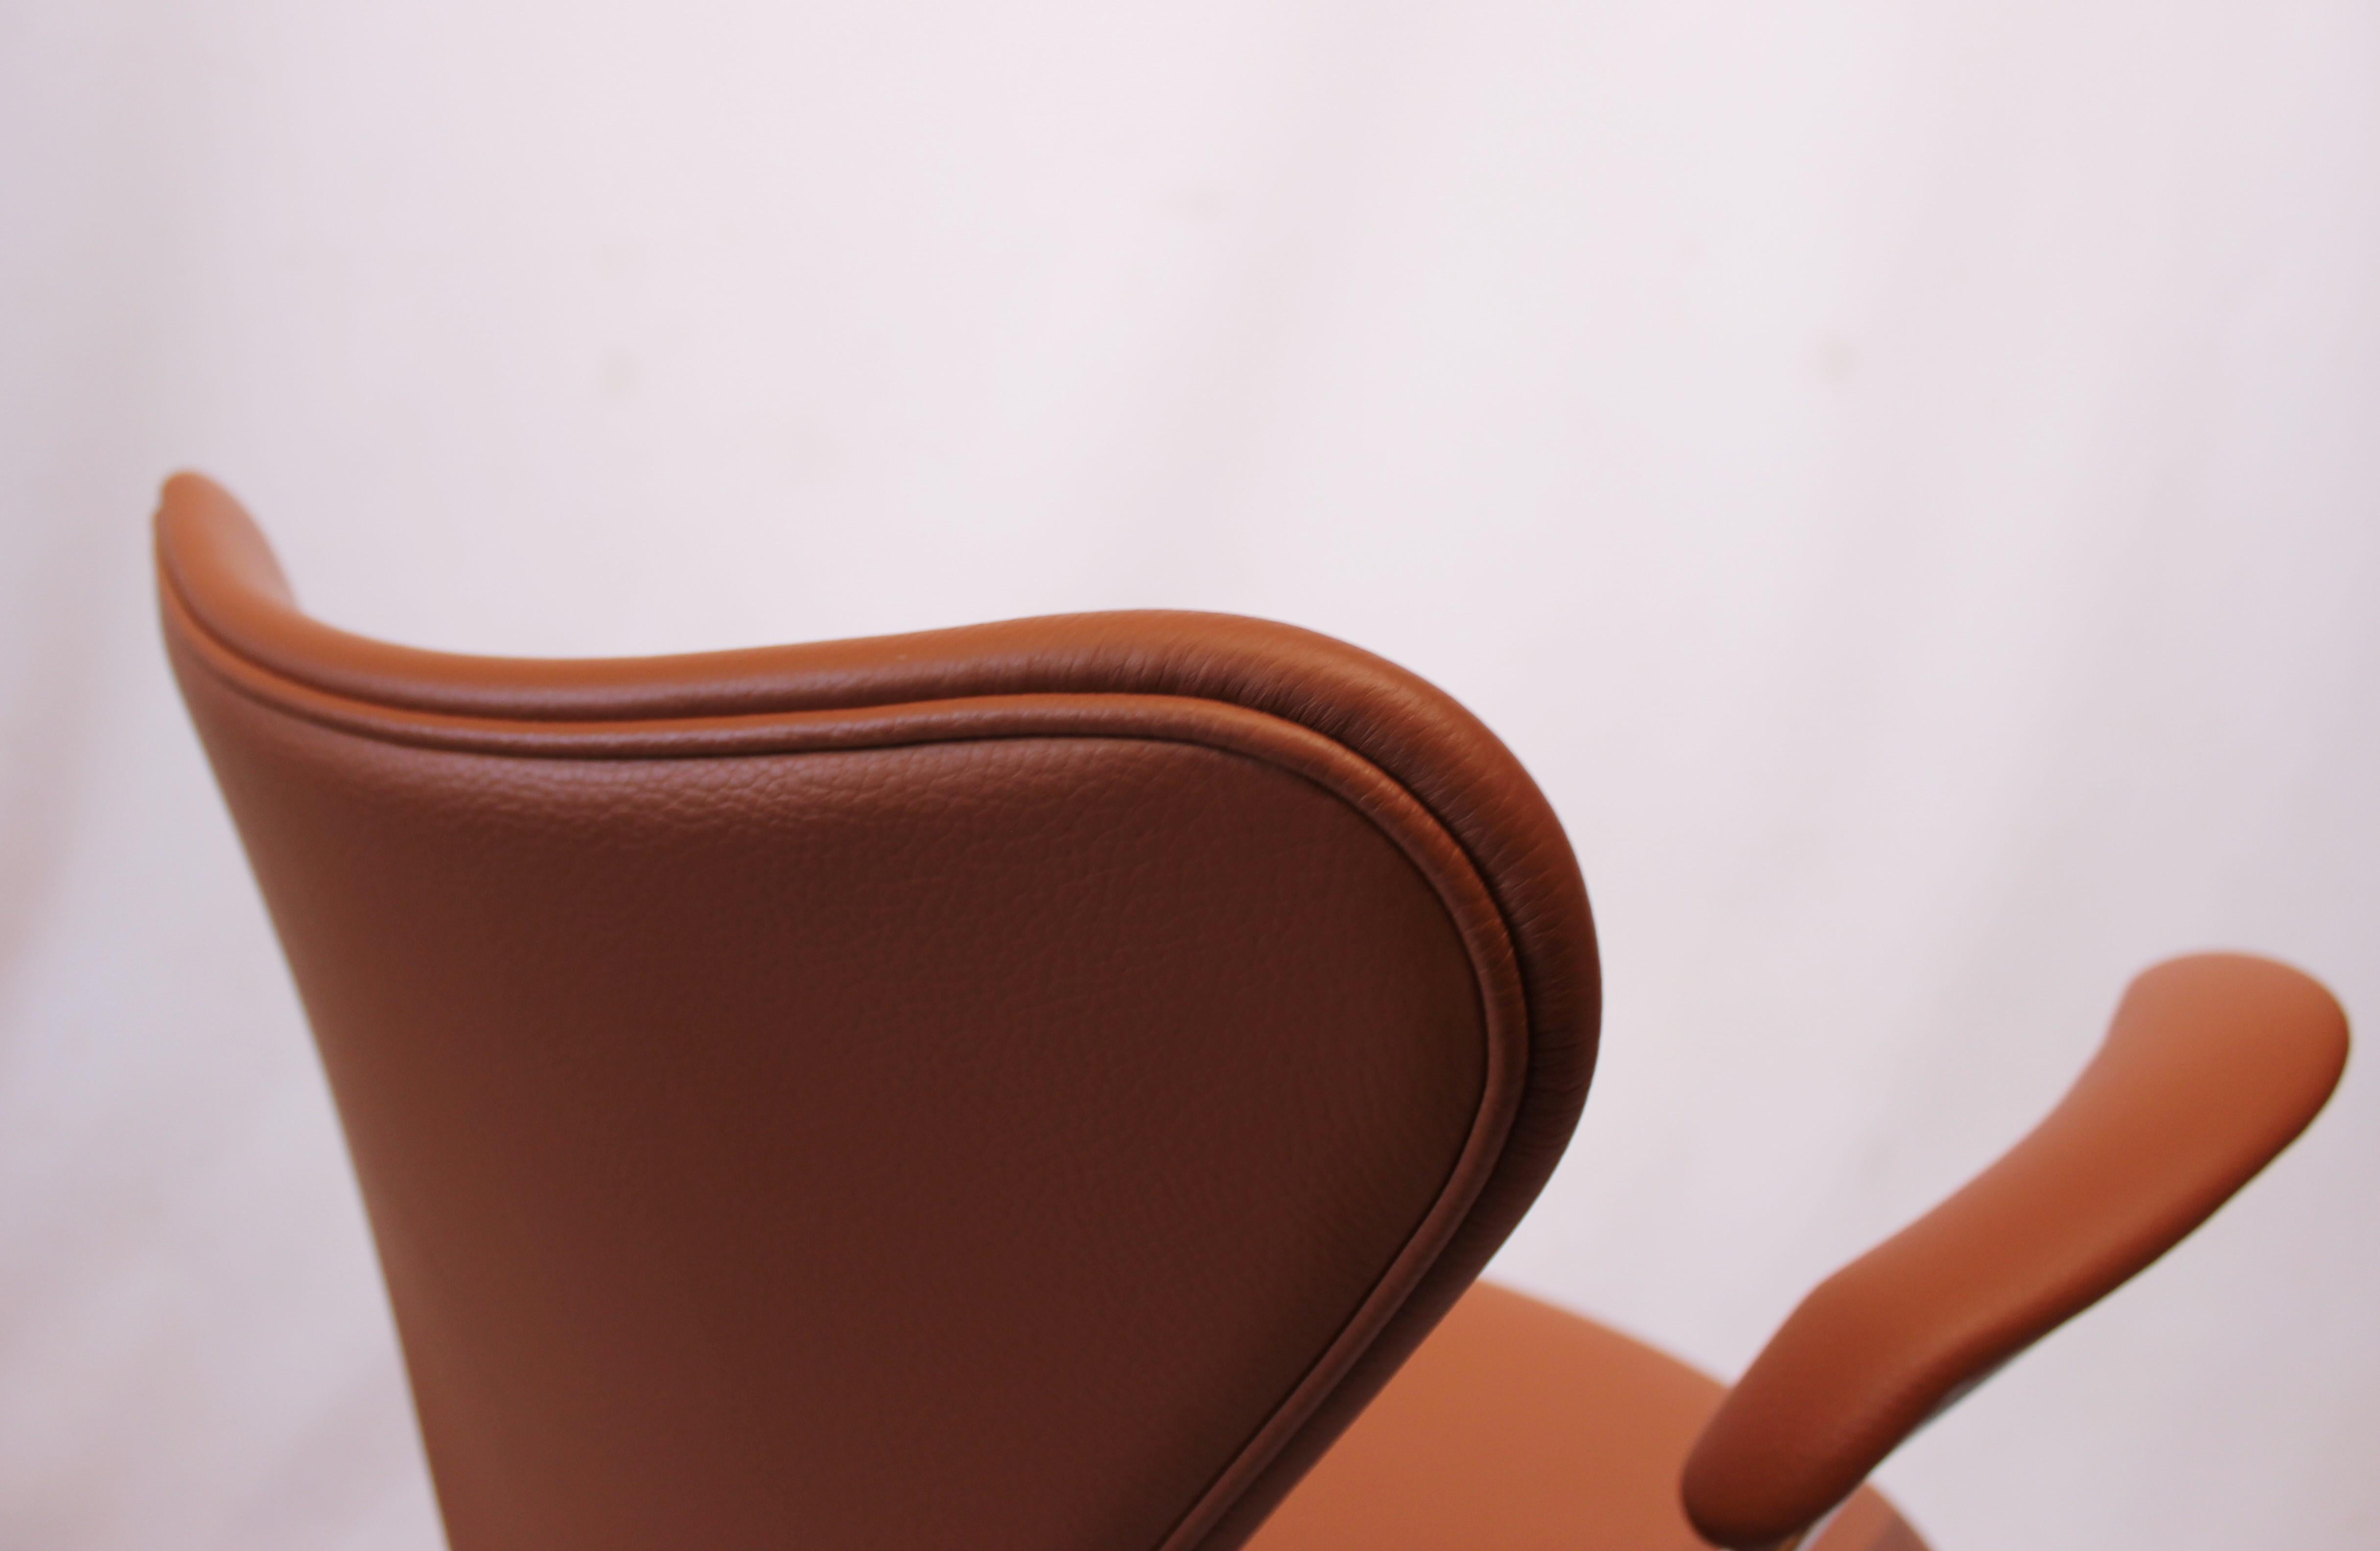 Seven Office Chair, Model 3217, in Cognac Classic Leather, Arne Jacobsen 1